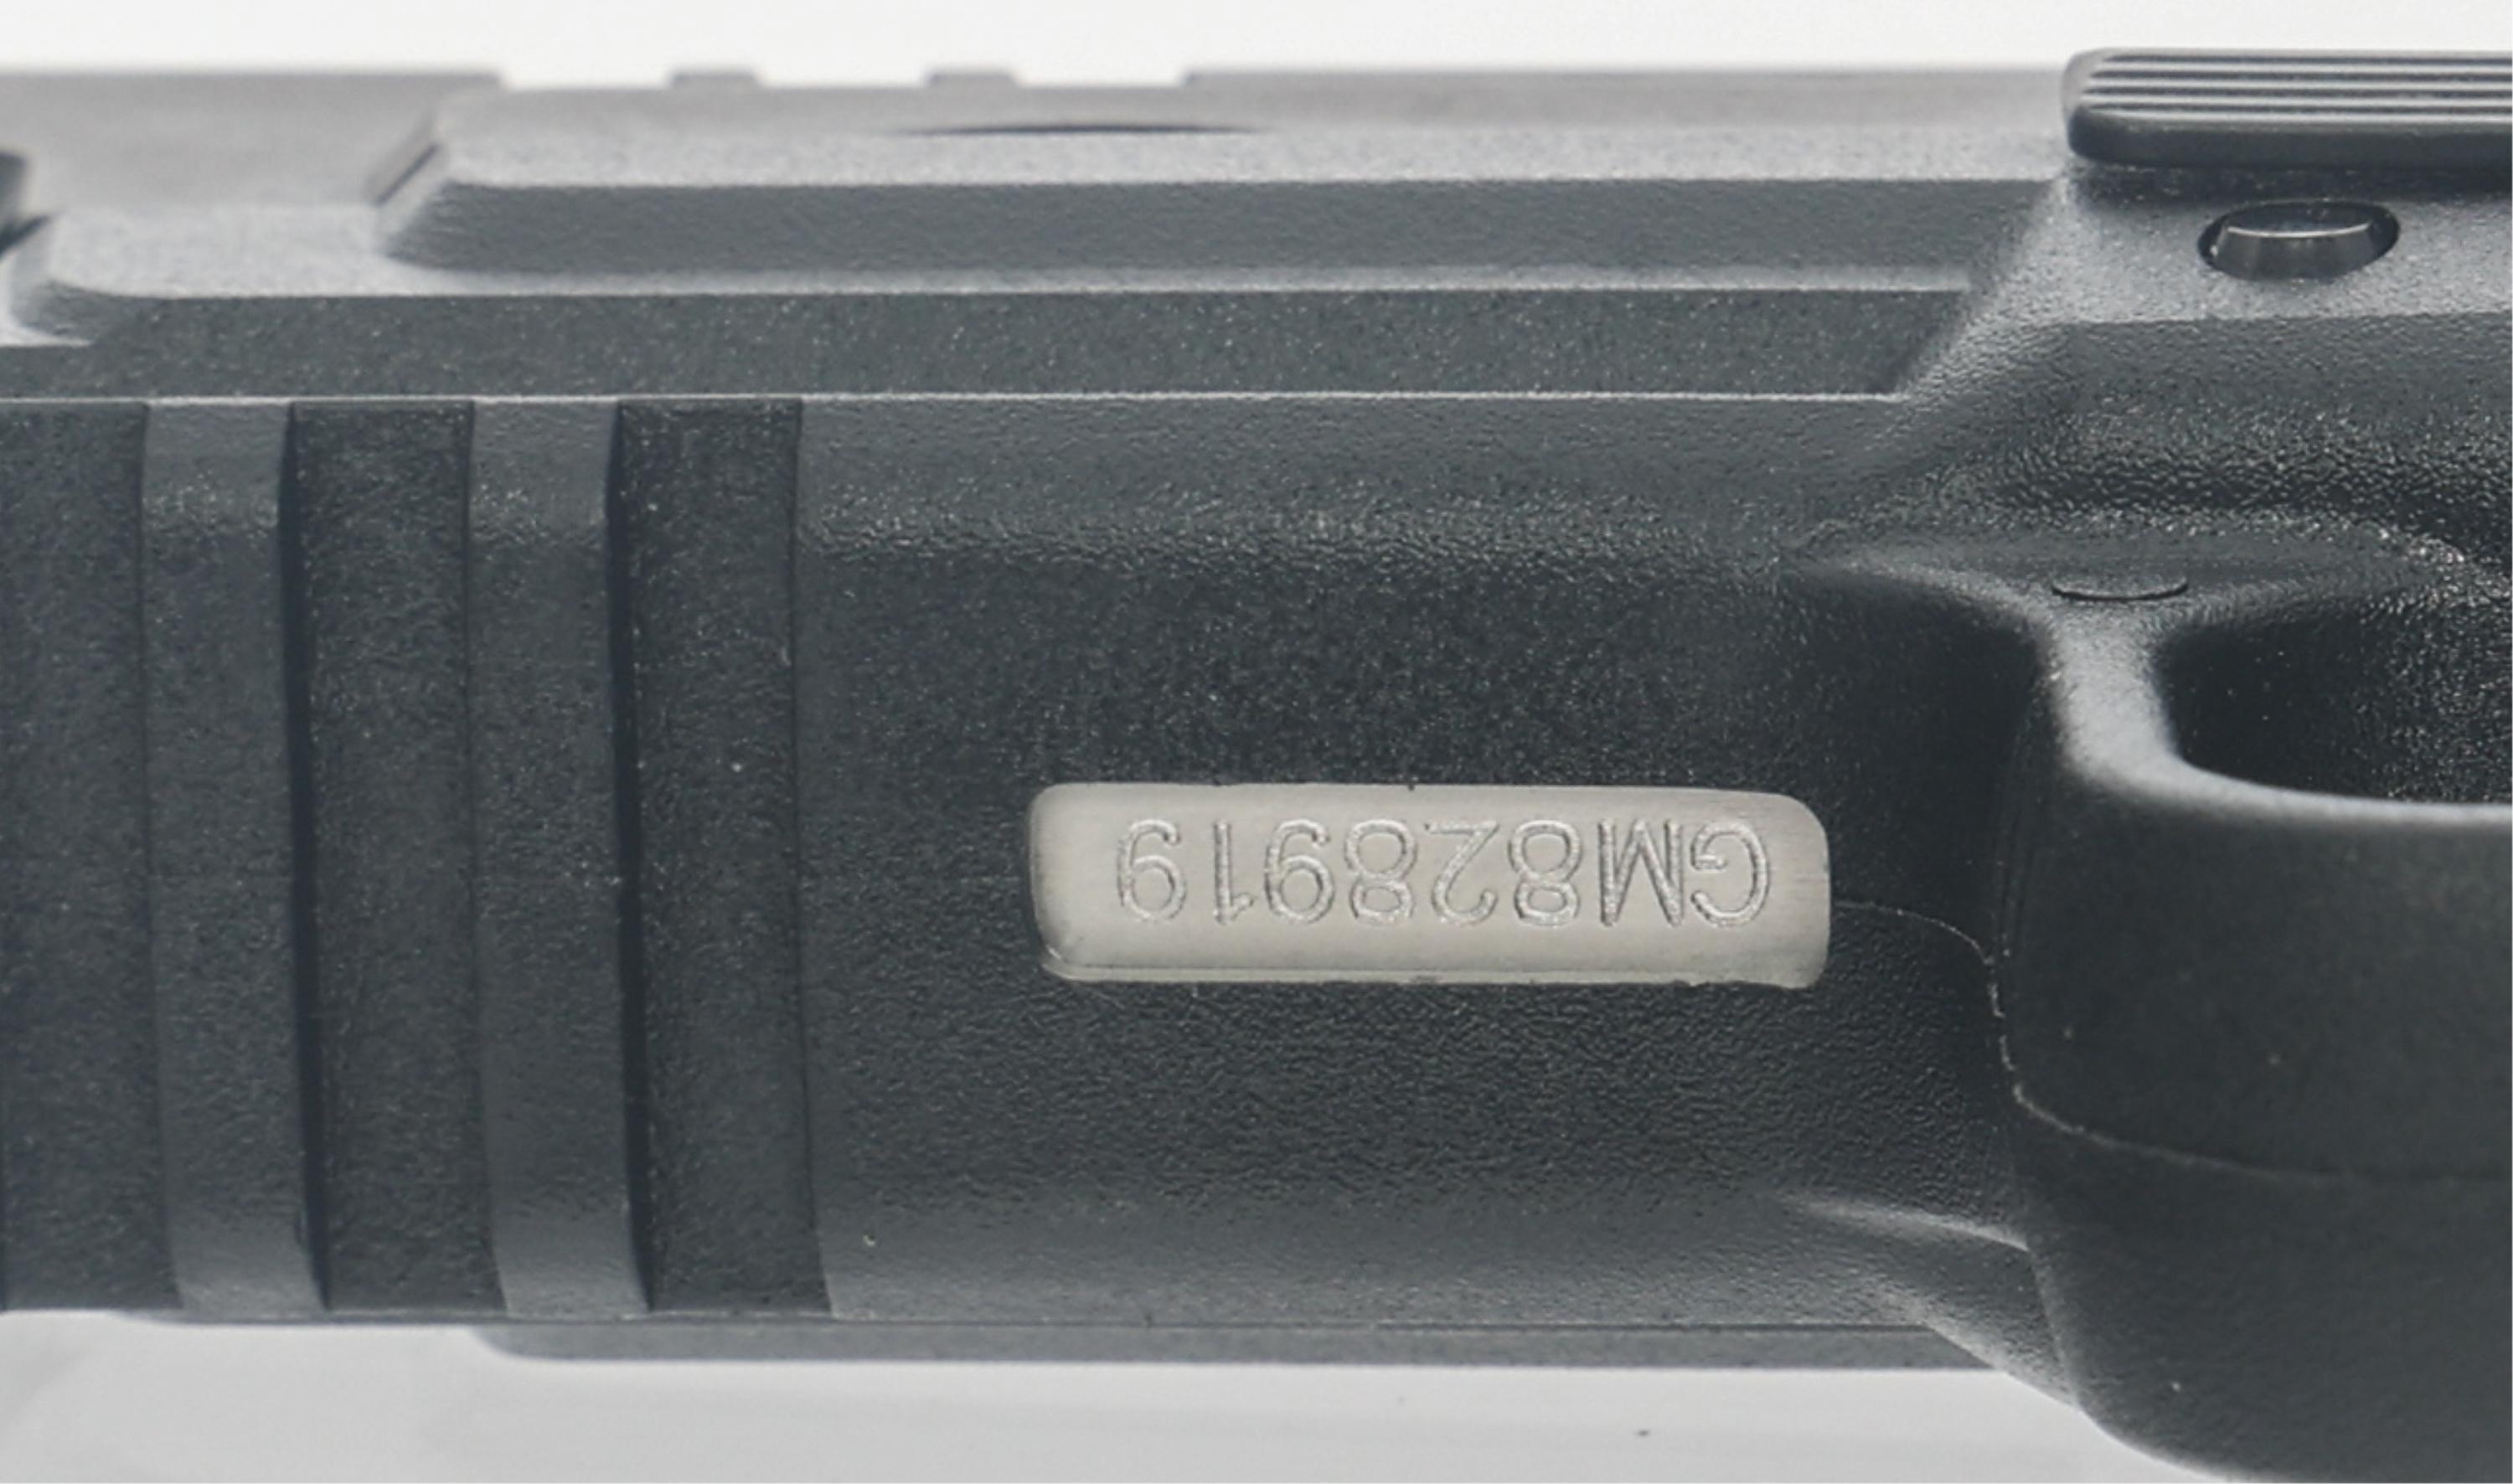 SPRINGFIELD MODEL XD-9 9x19mm CALIBER PISTOL